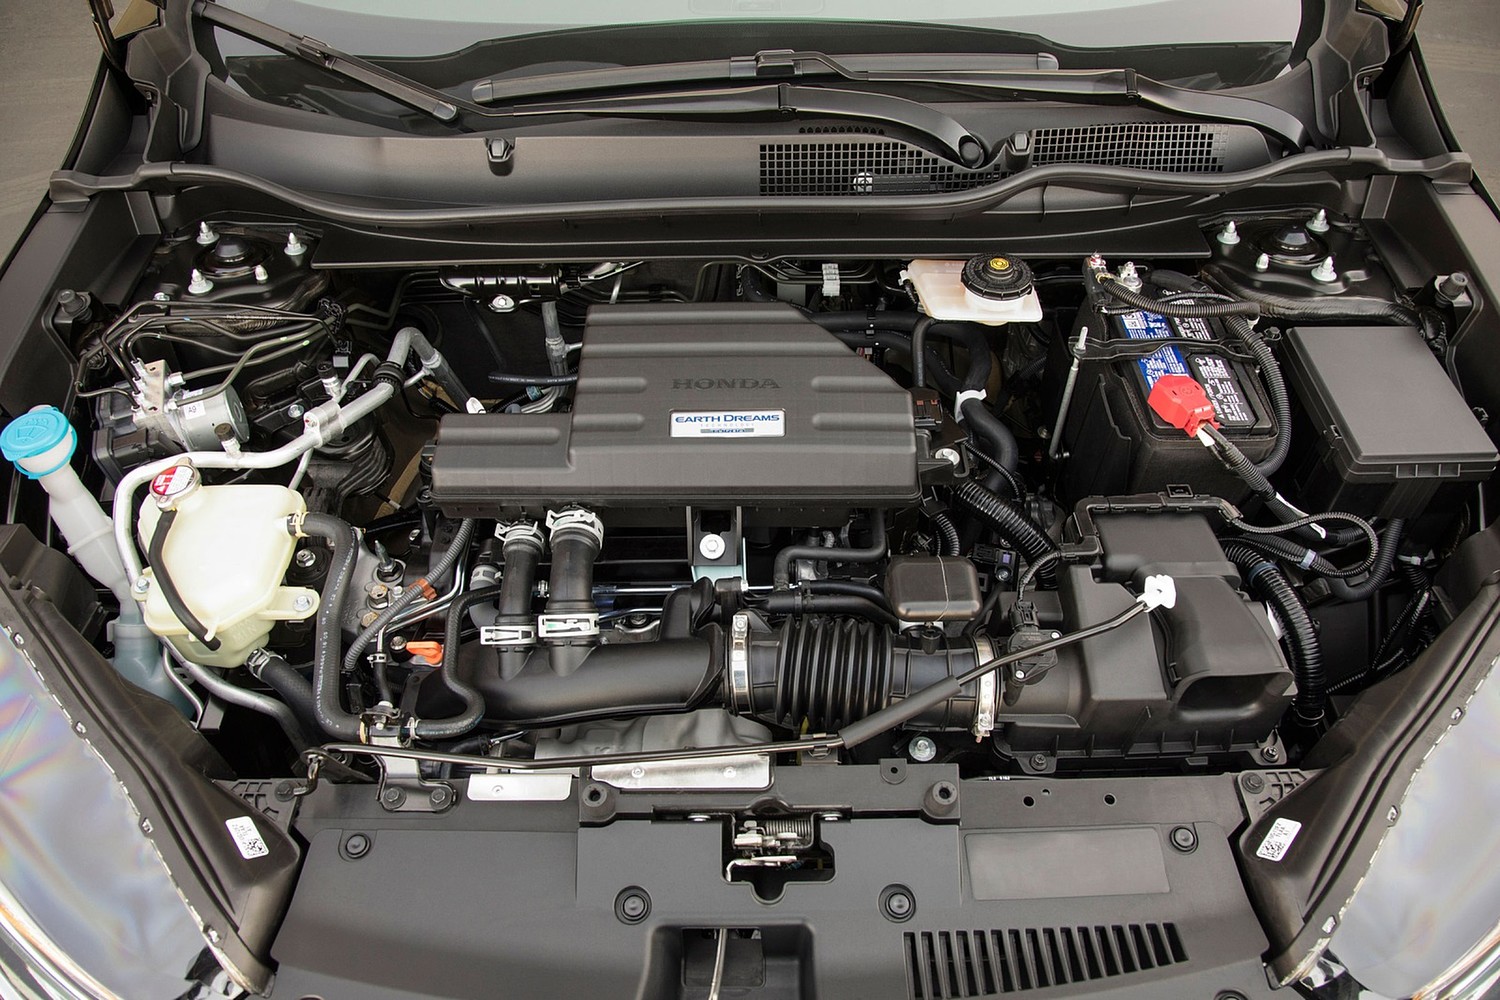 Honda CR-V Touring 4dr SUV 1.5L I4 Turbo Engine (2017 model year shown)